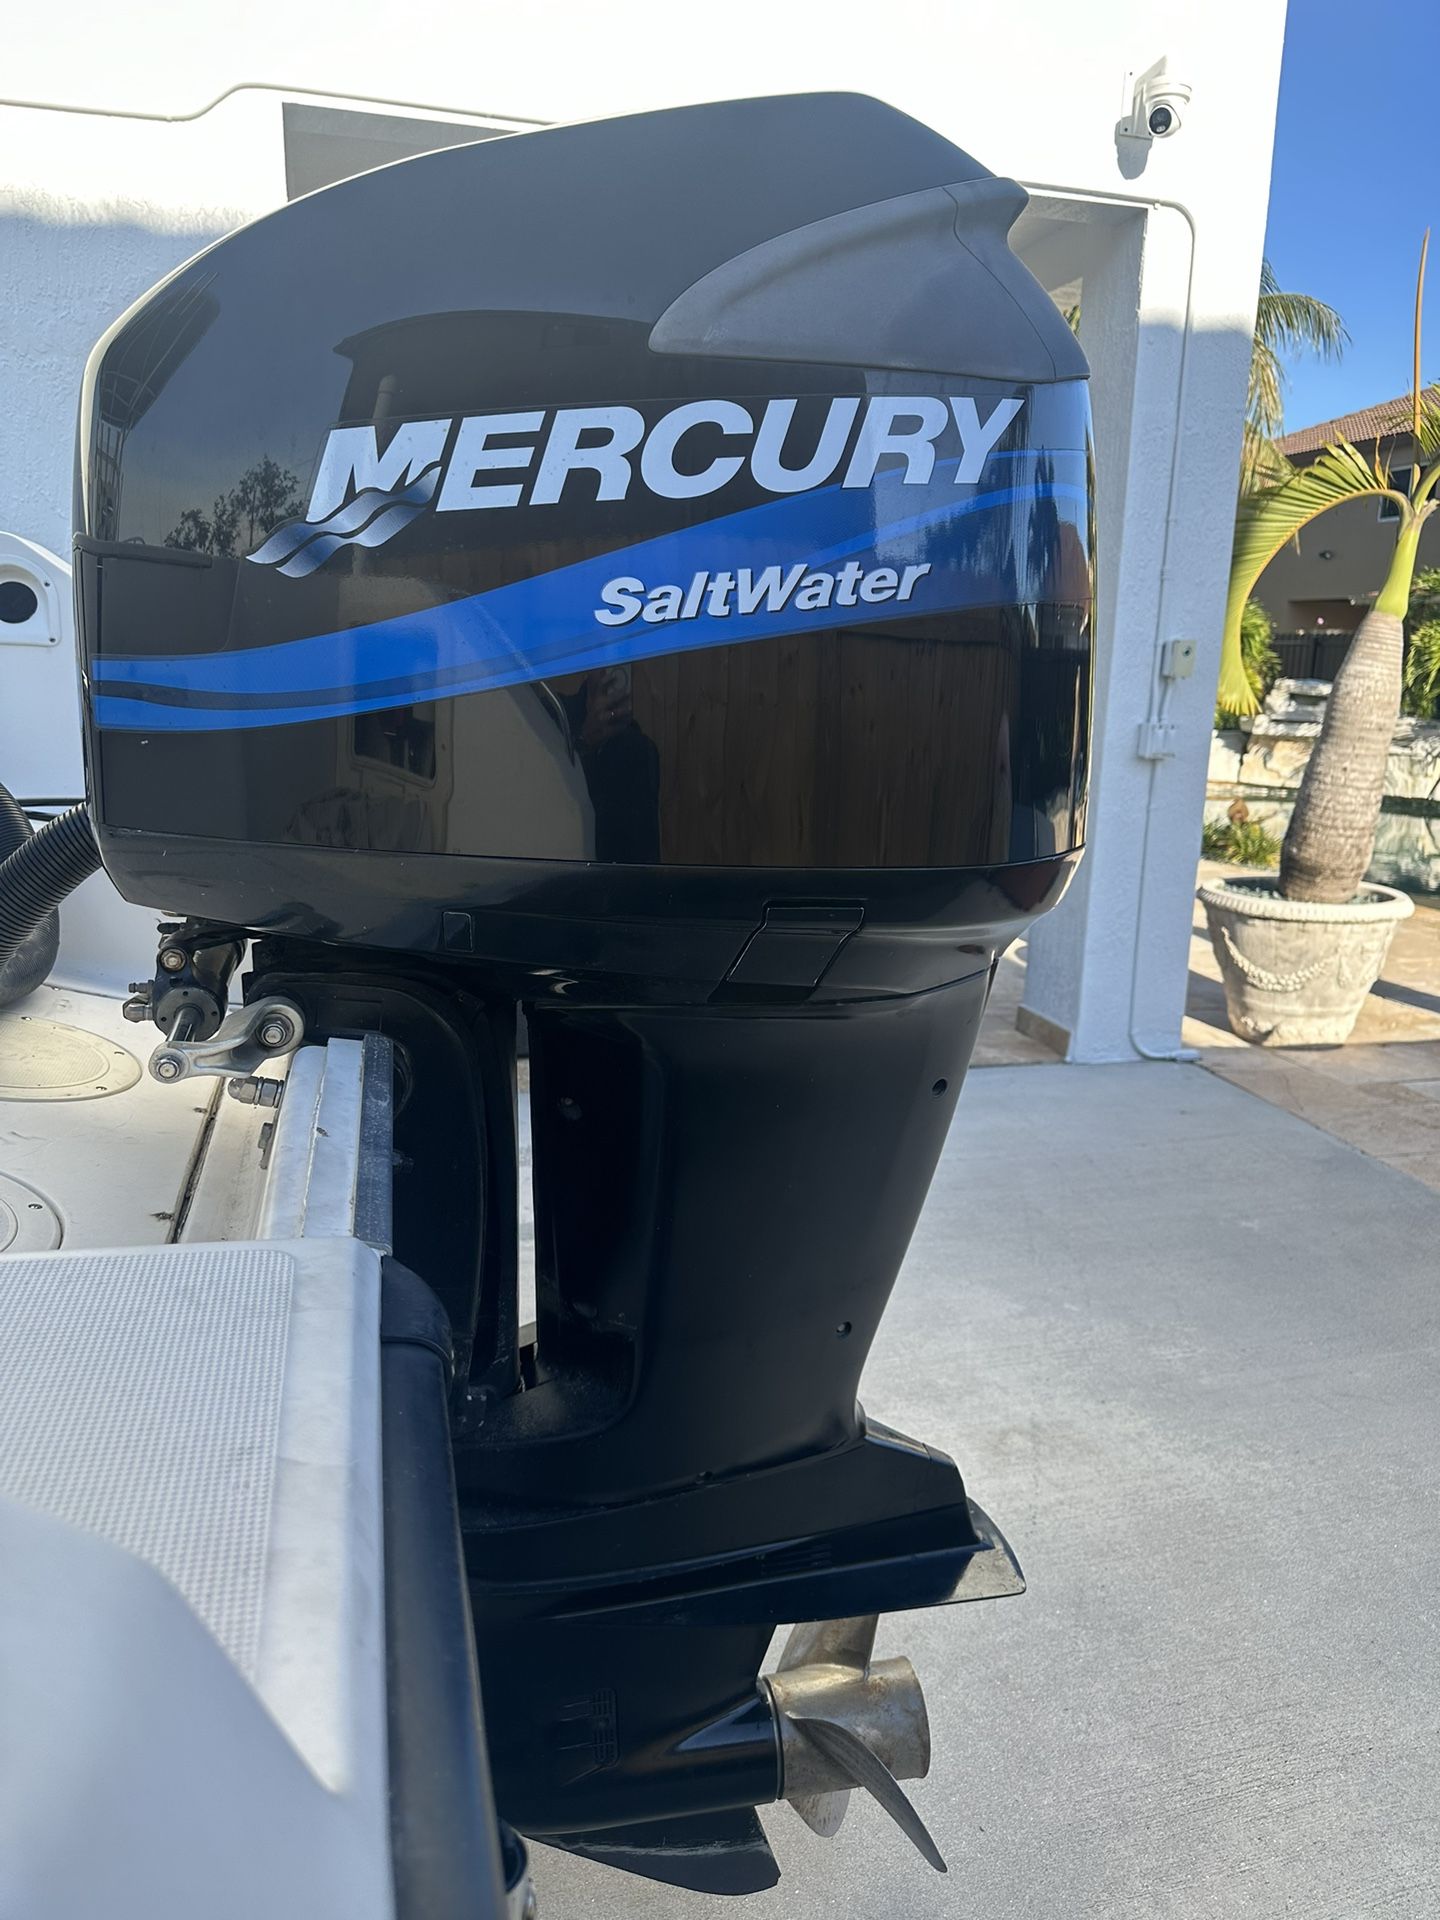 Mercury Boat Motor For Sale